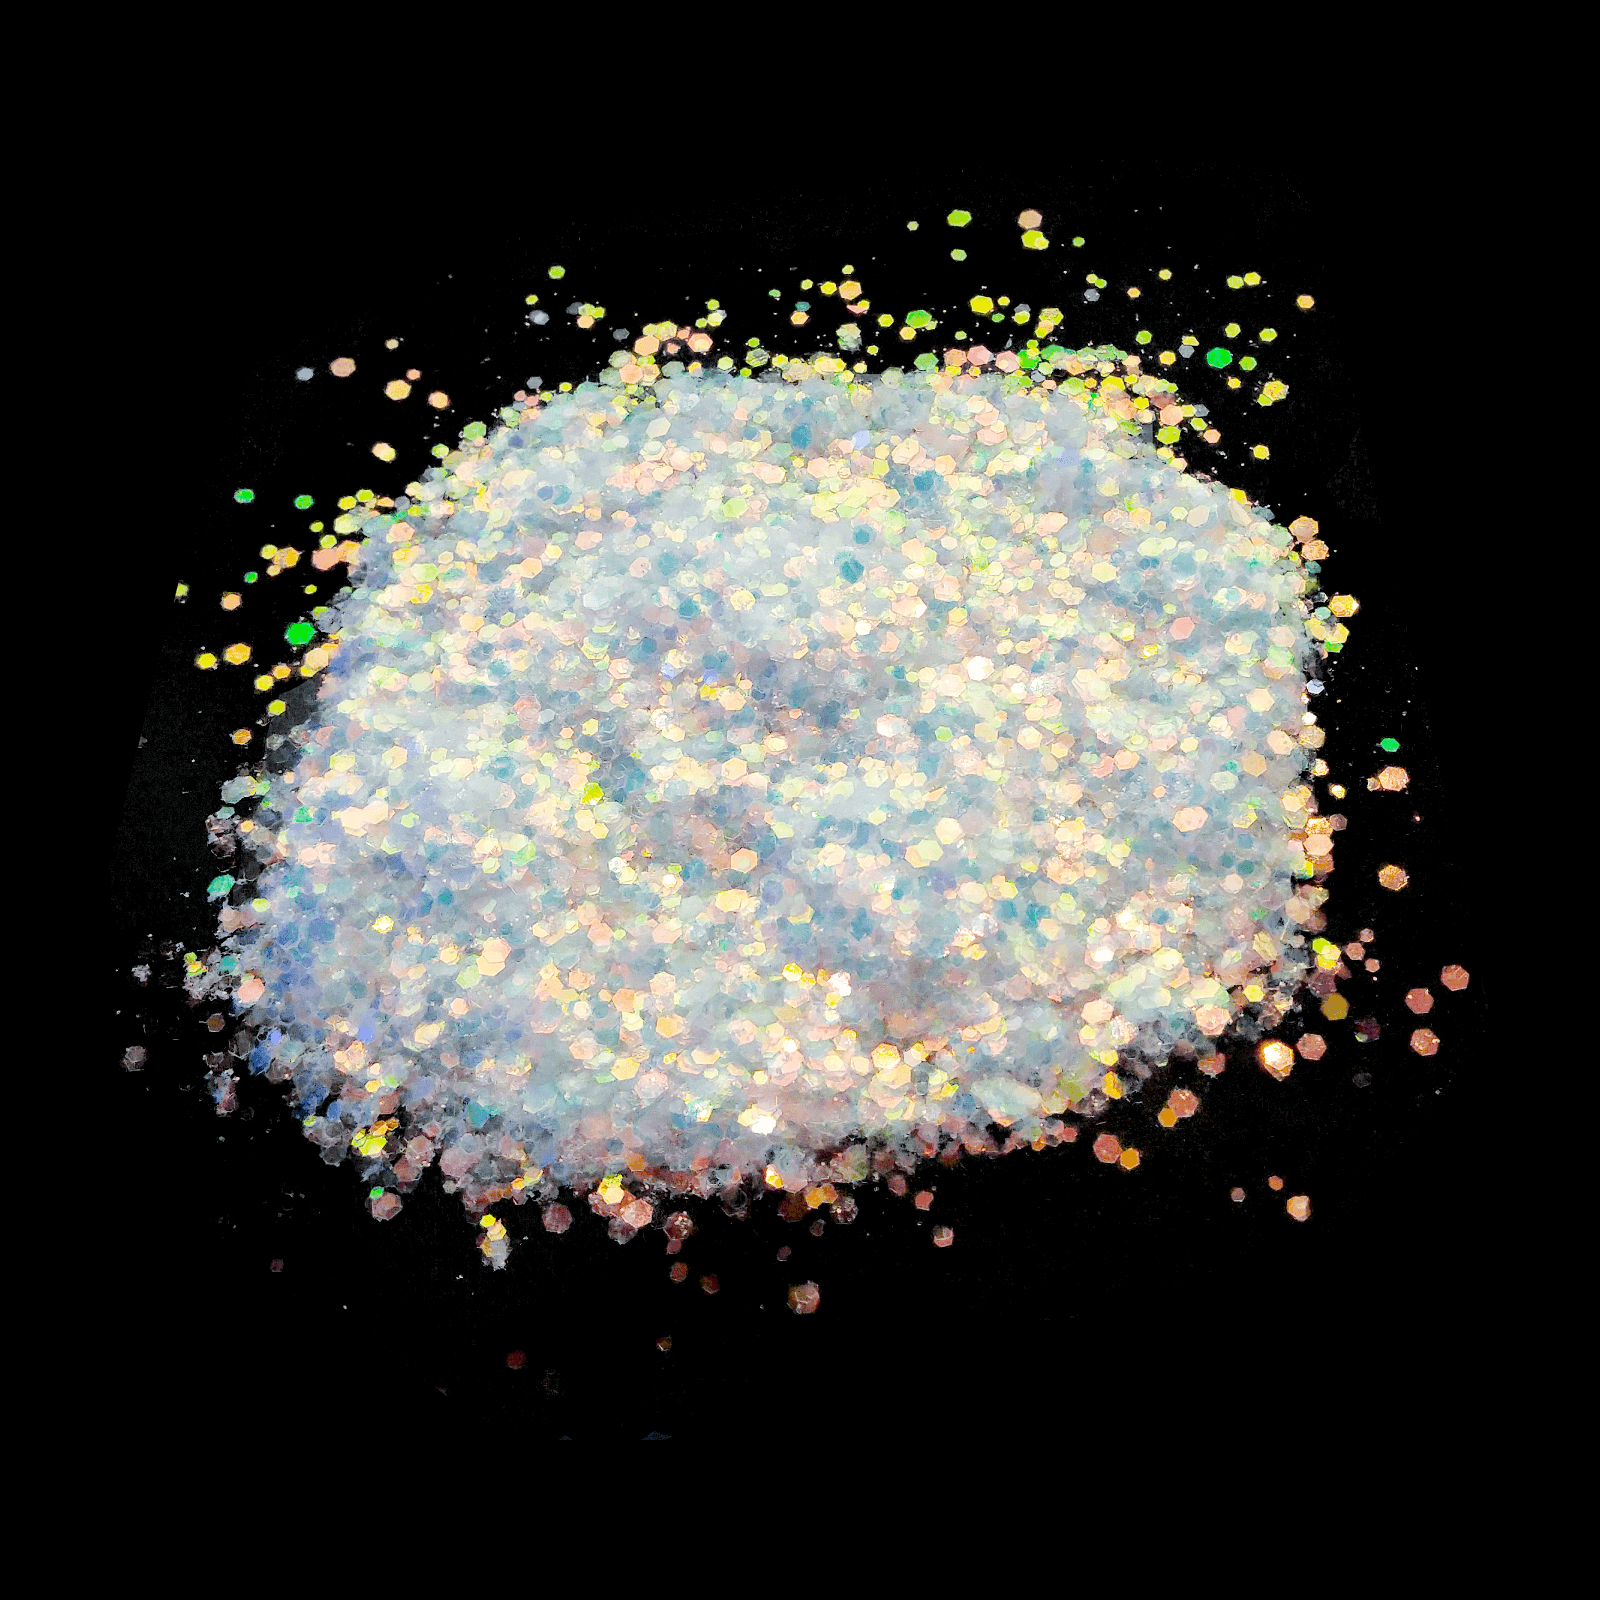 White Opal Iridescent Hexagon Glitter Mix - Snow Drops  By Crazoulis Glitter